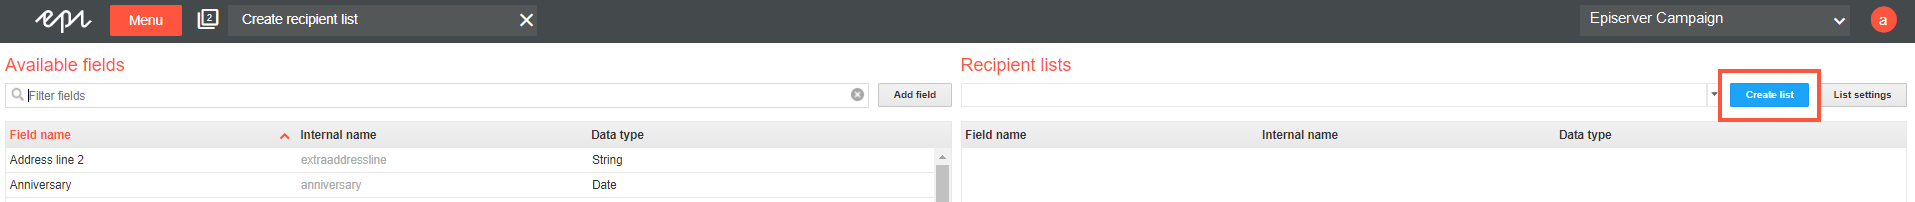 Image: Create a recipient list